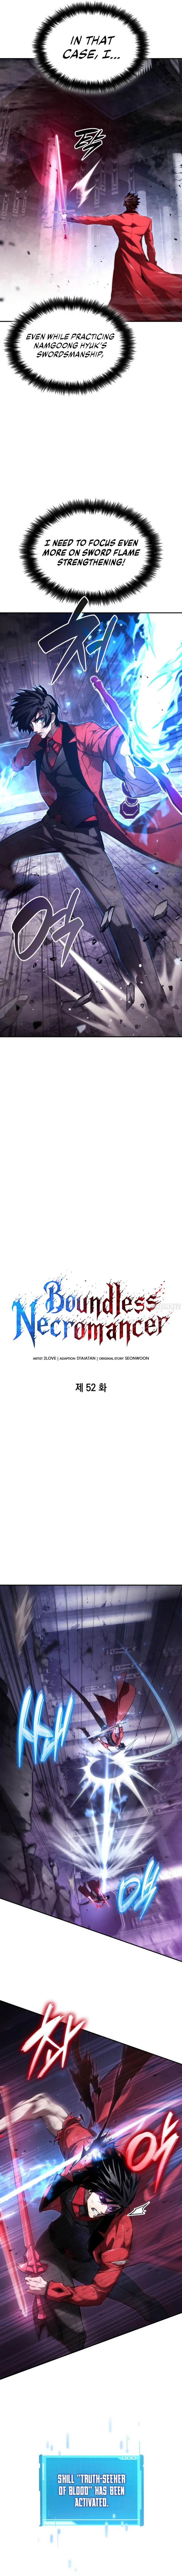 boundless-necromancer-chap-52-4